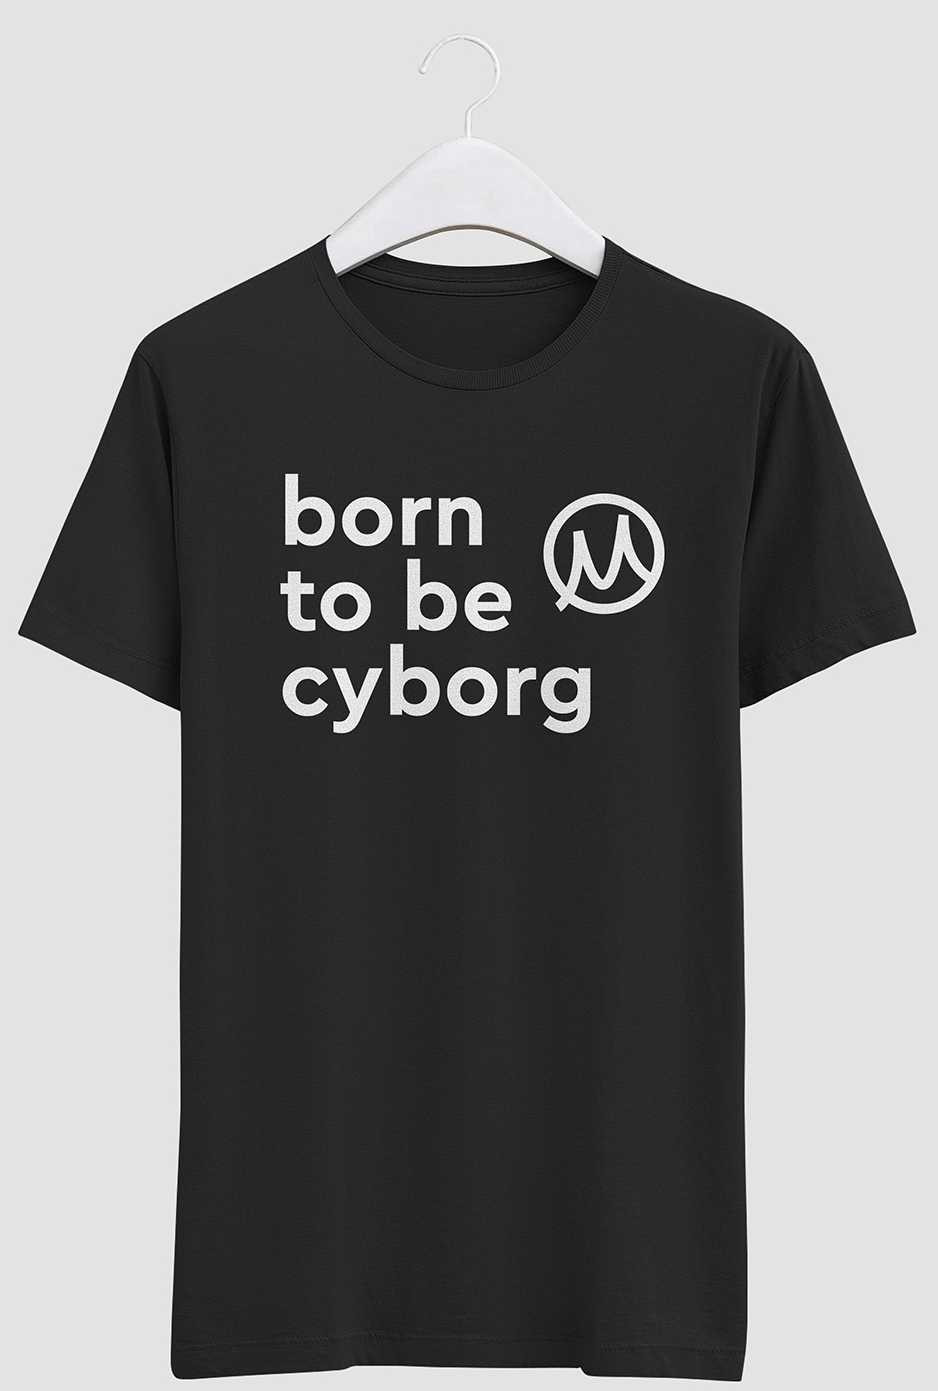  born to be cyborg ()